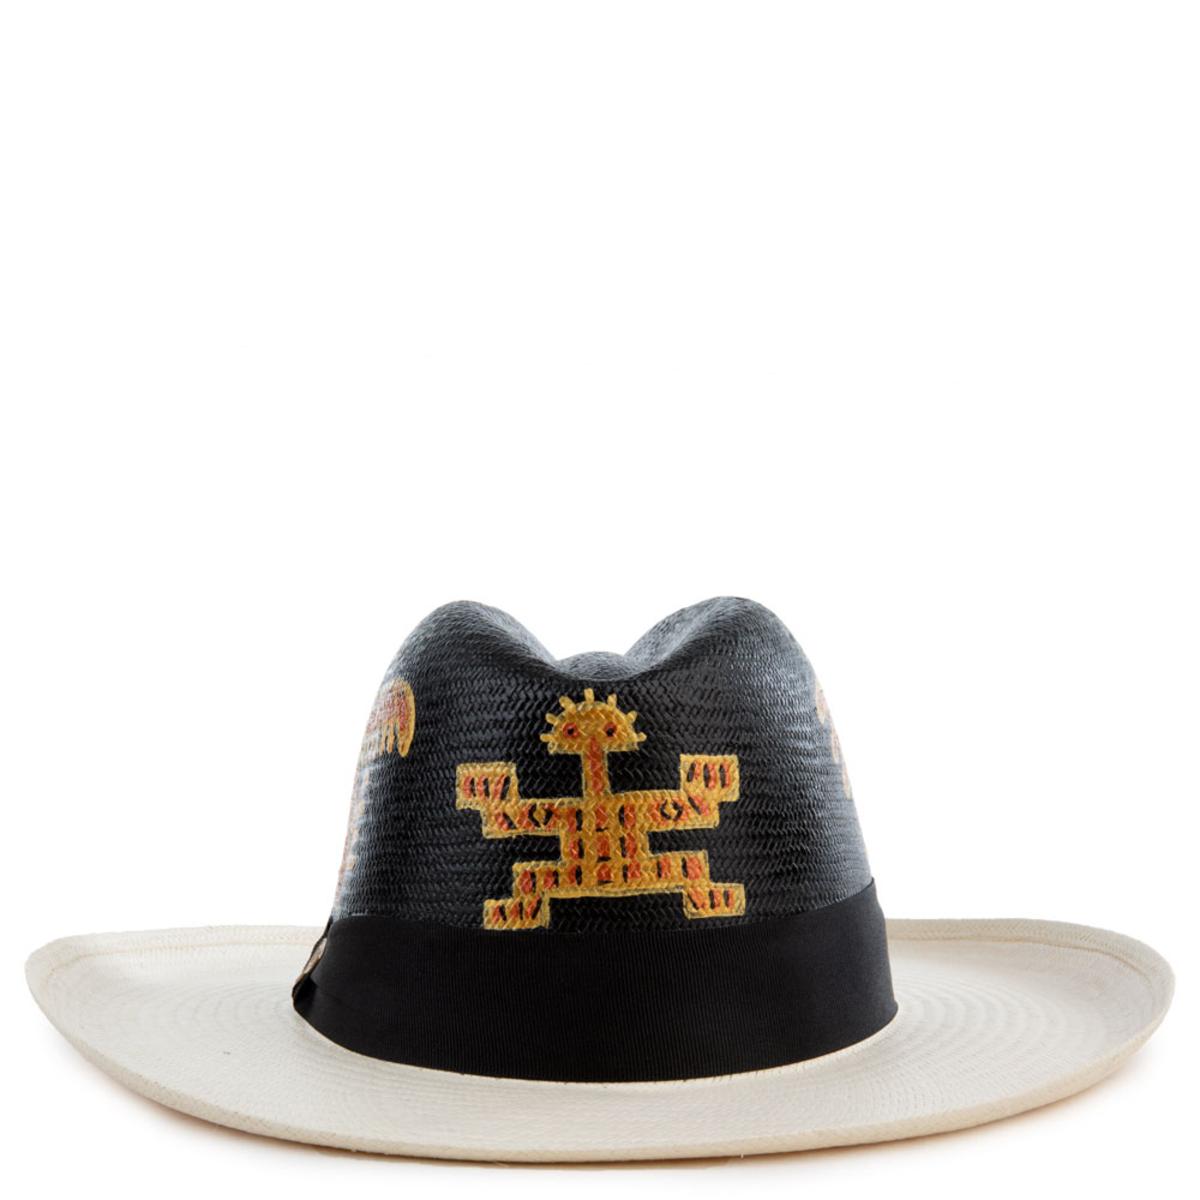 Precolombino Dorado Panama Hat